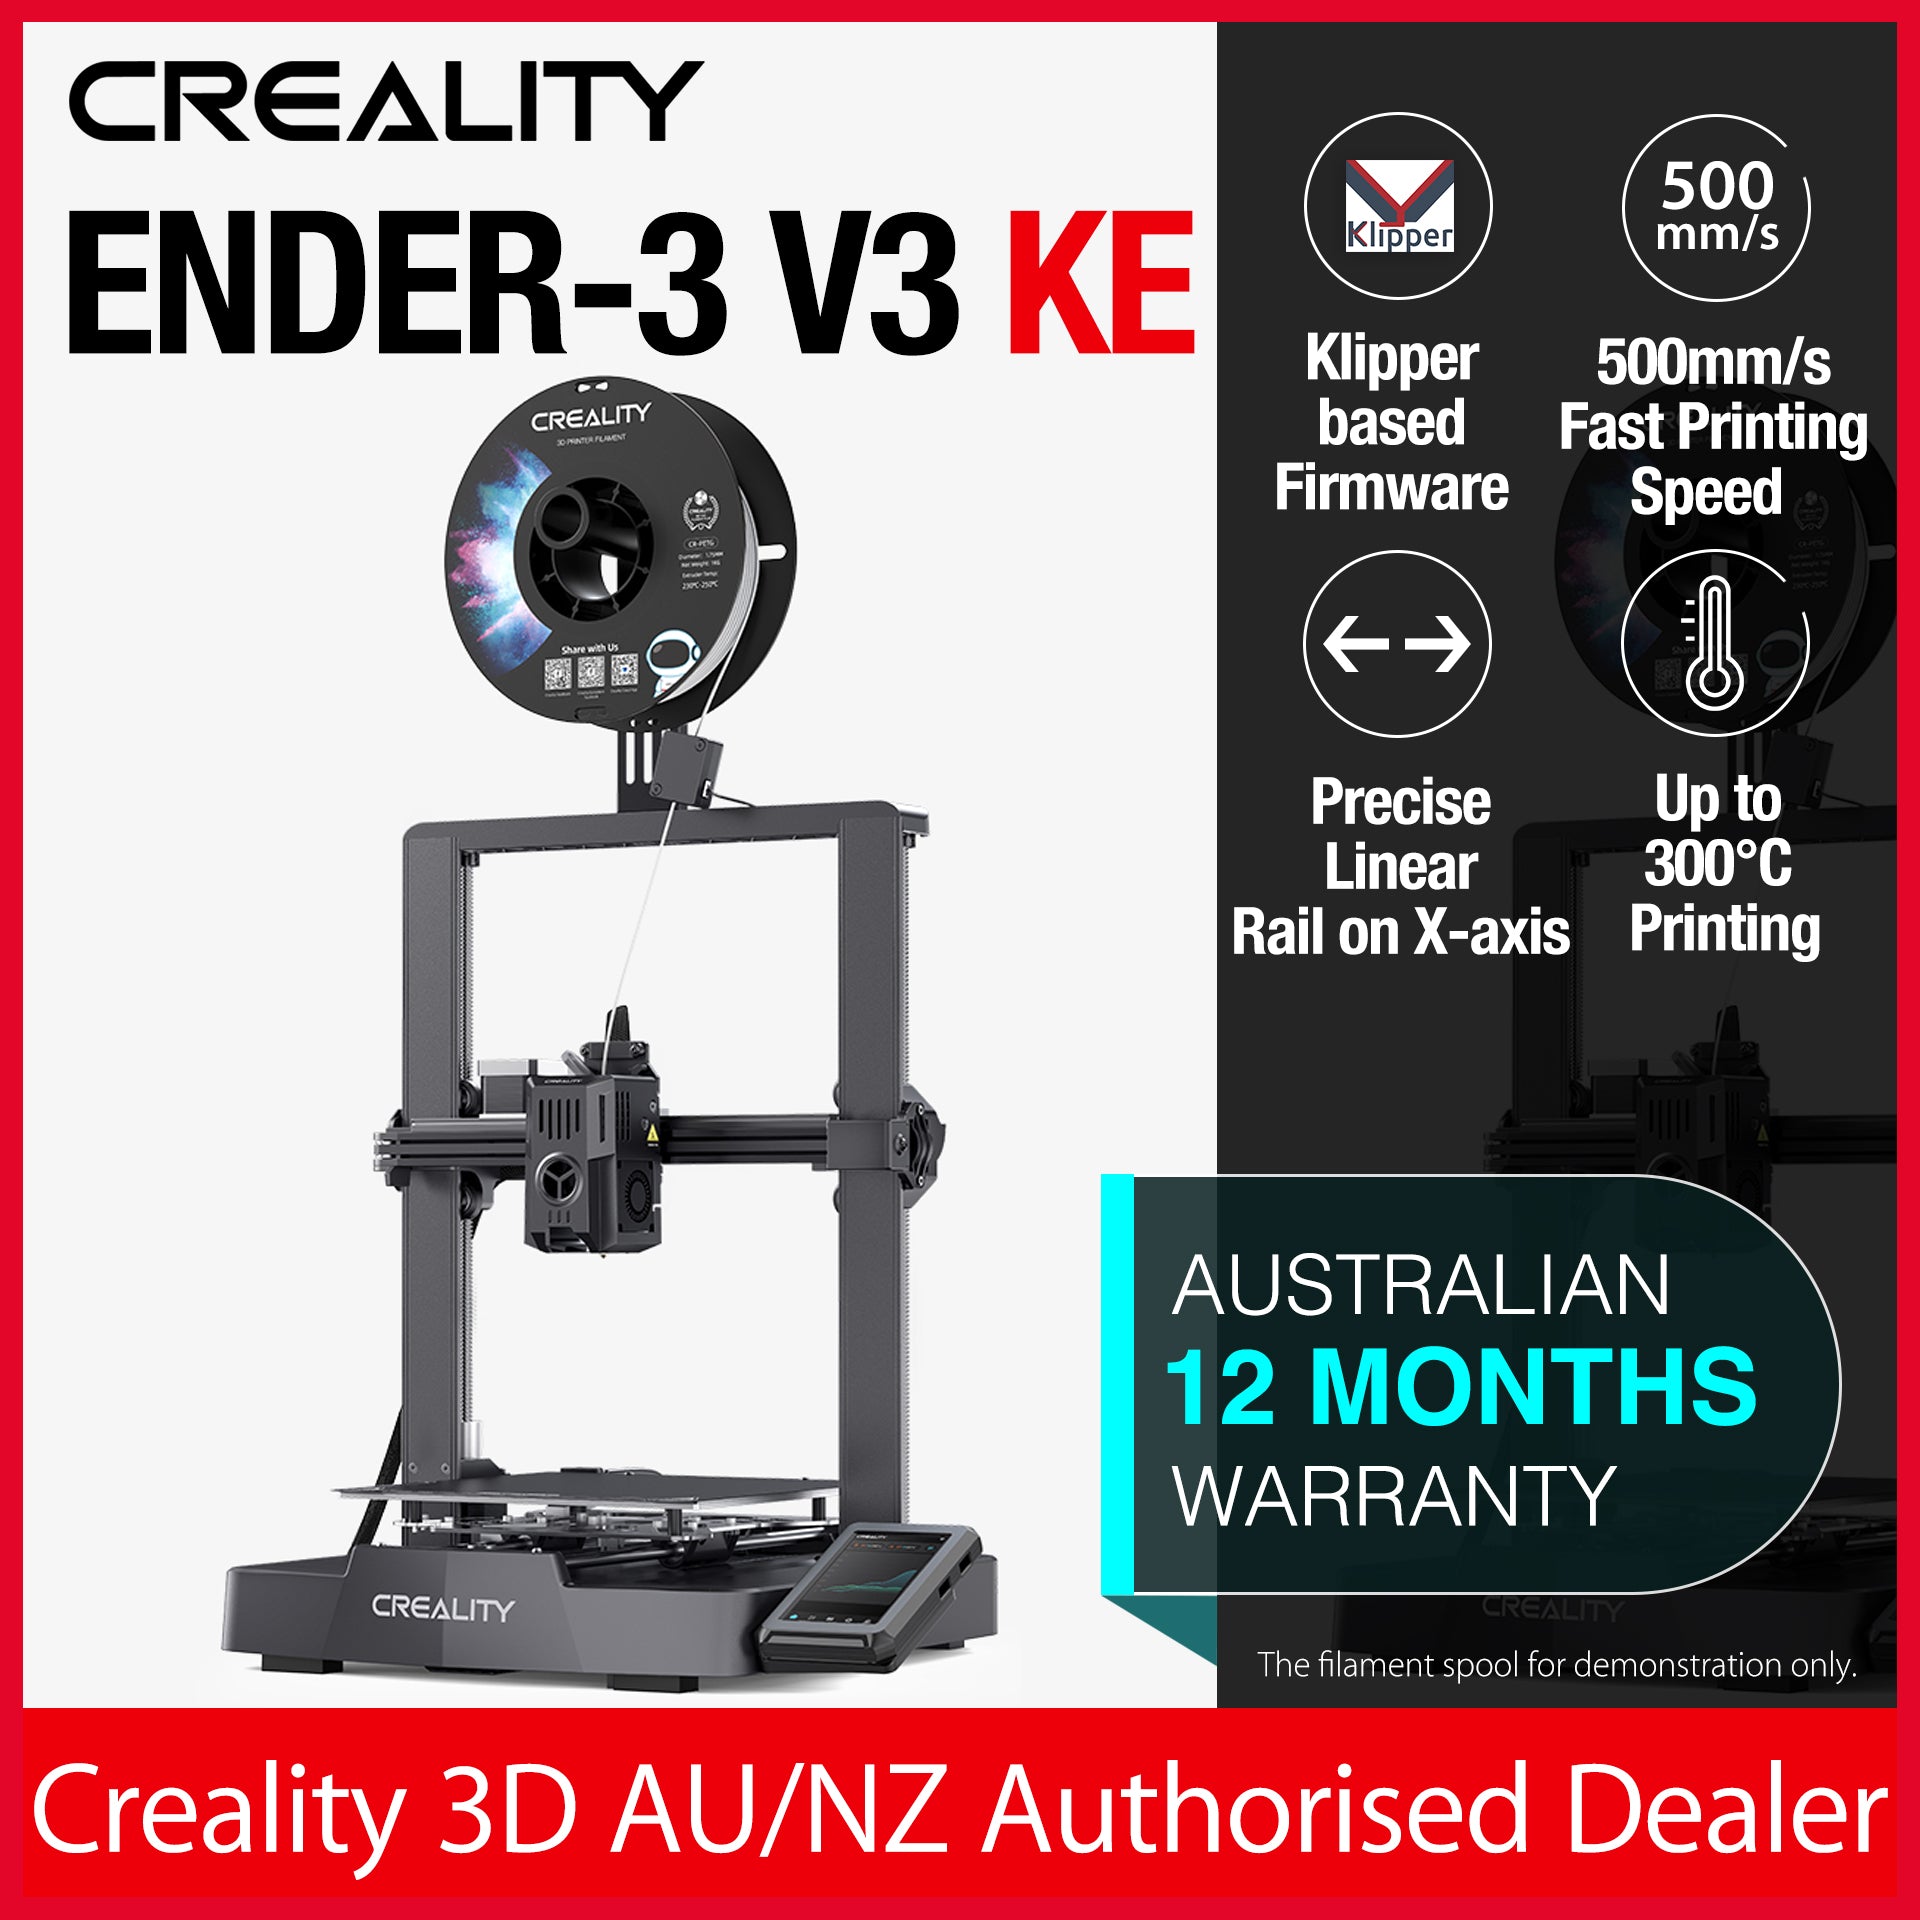 Creality Ender-3 V3 KE - Only $459 - Creality AU Local Store